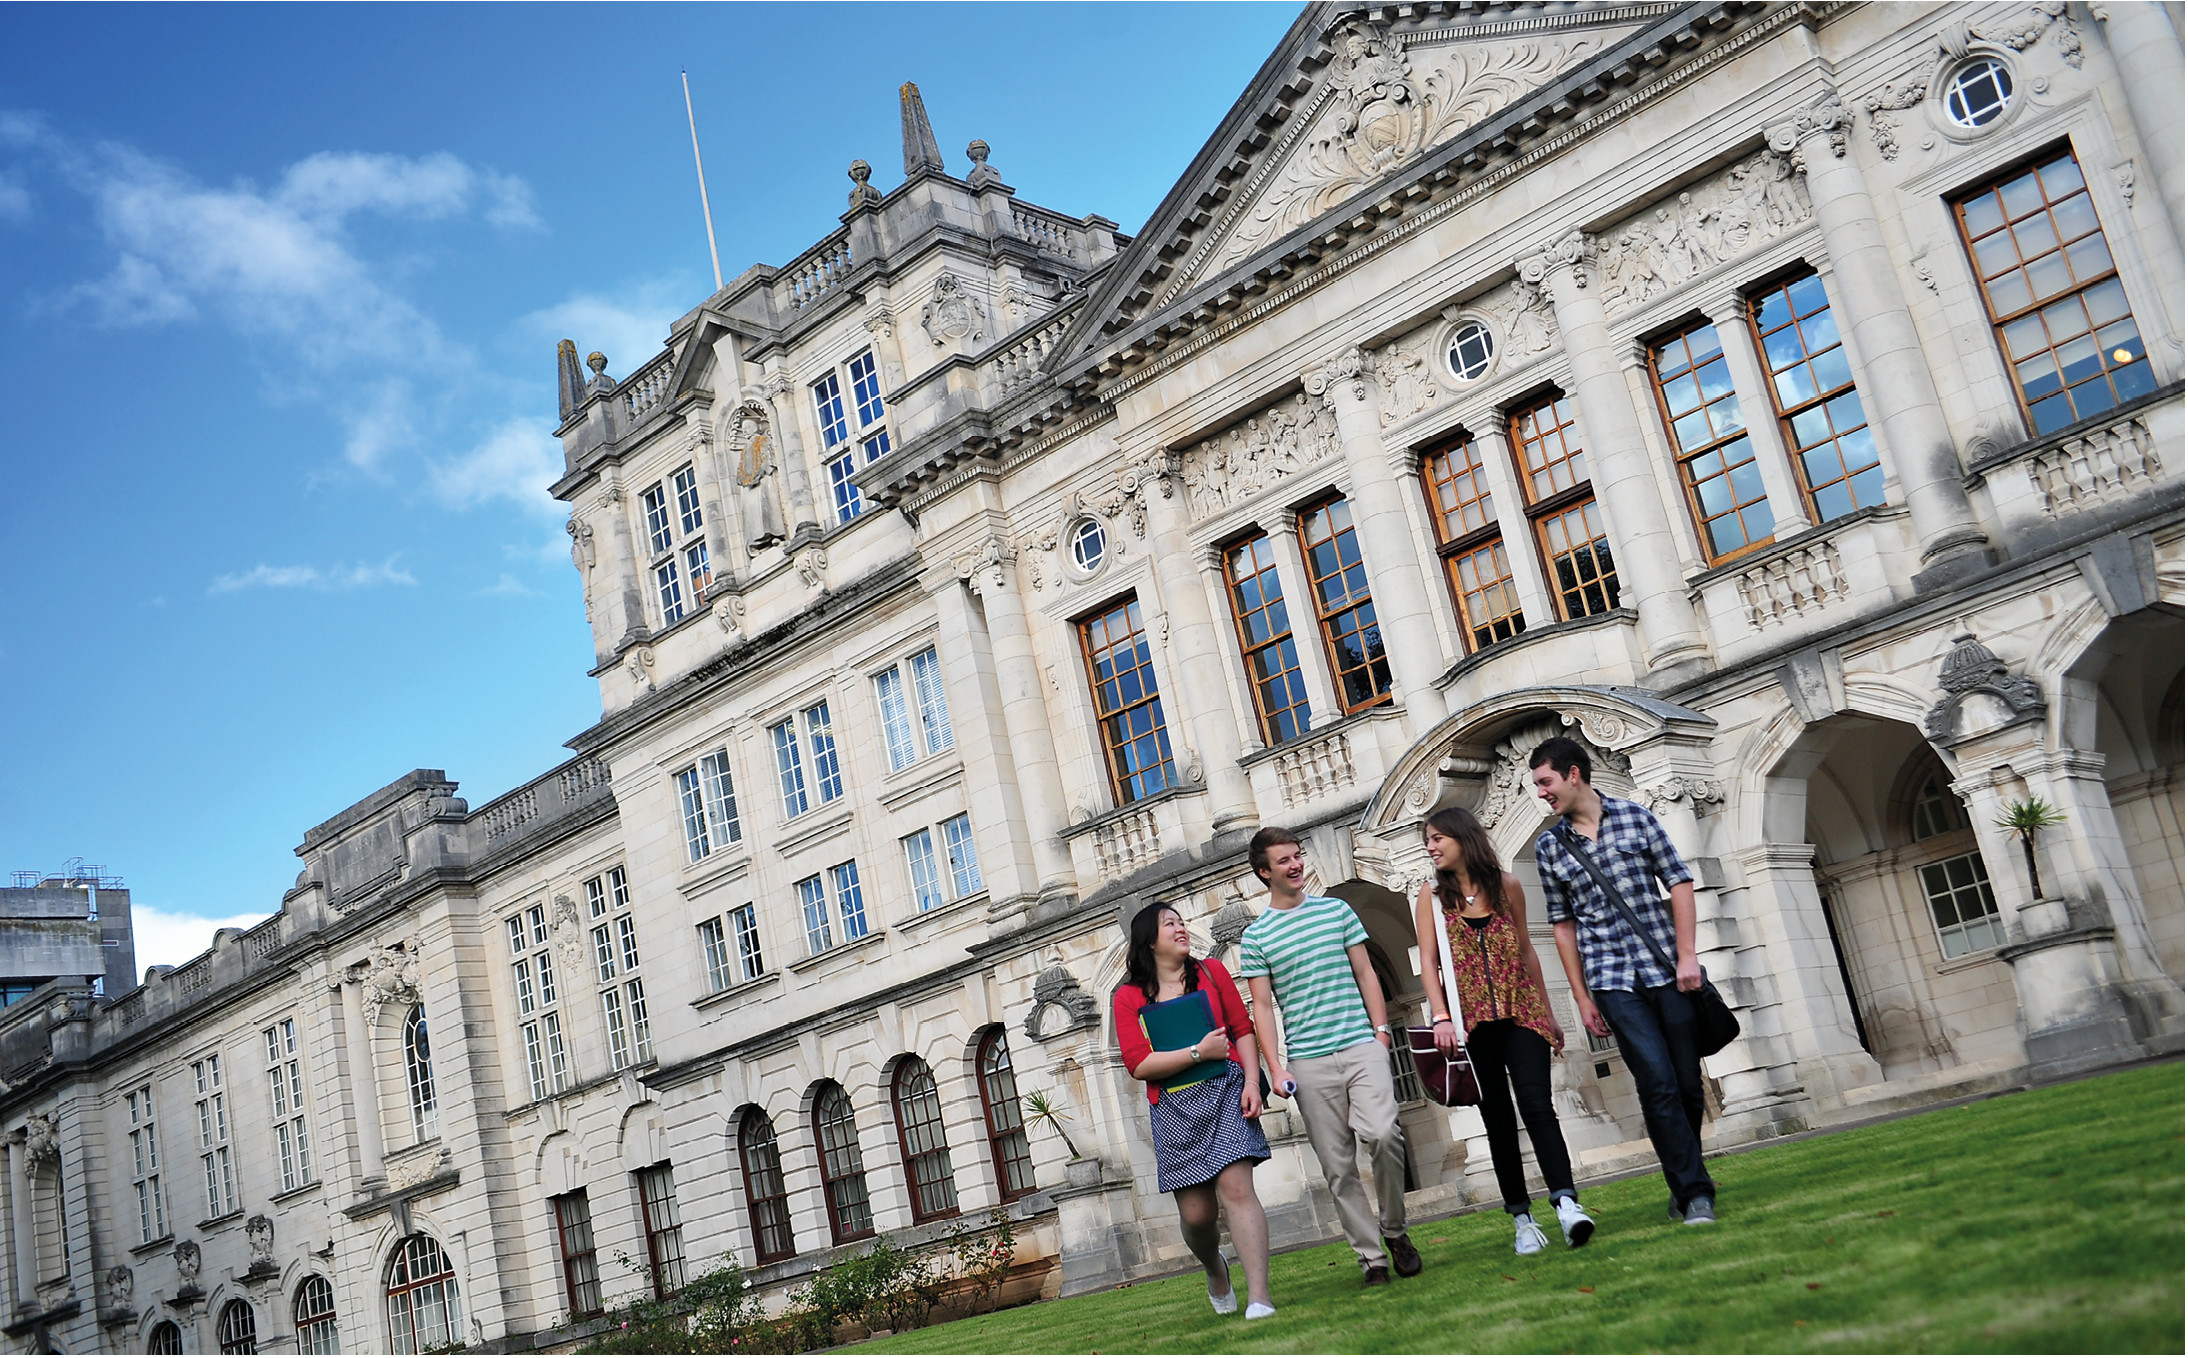 Undergraduates at Cardiff University